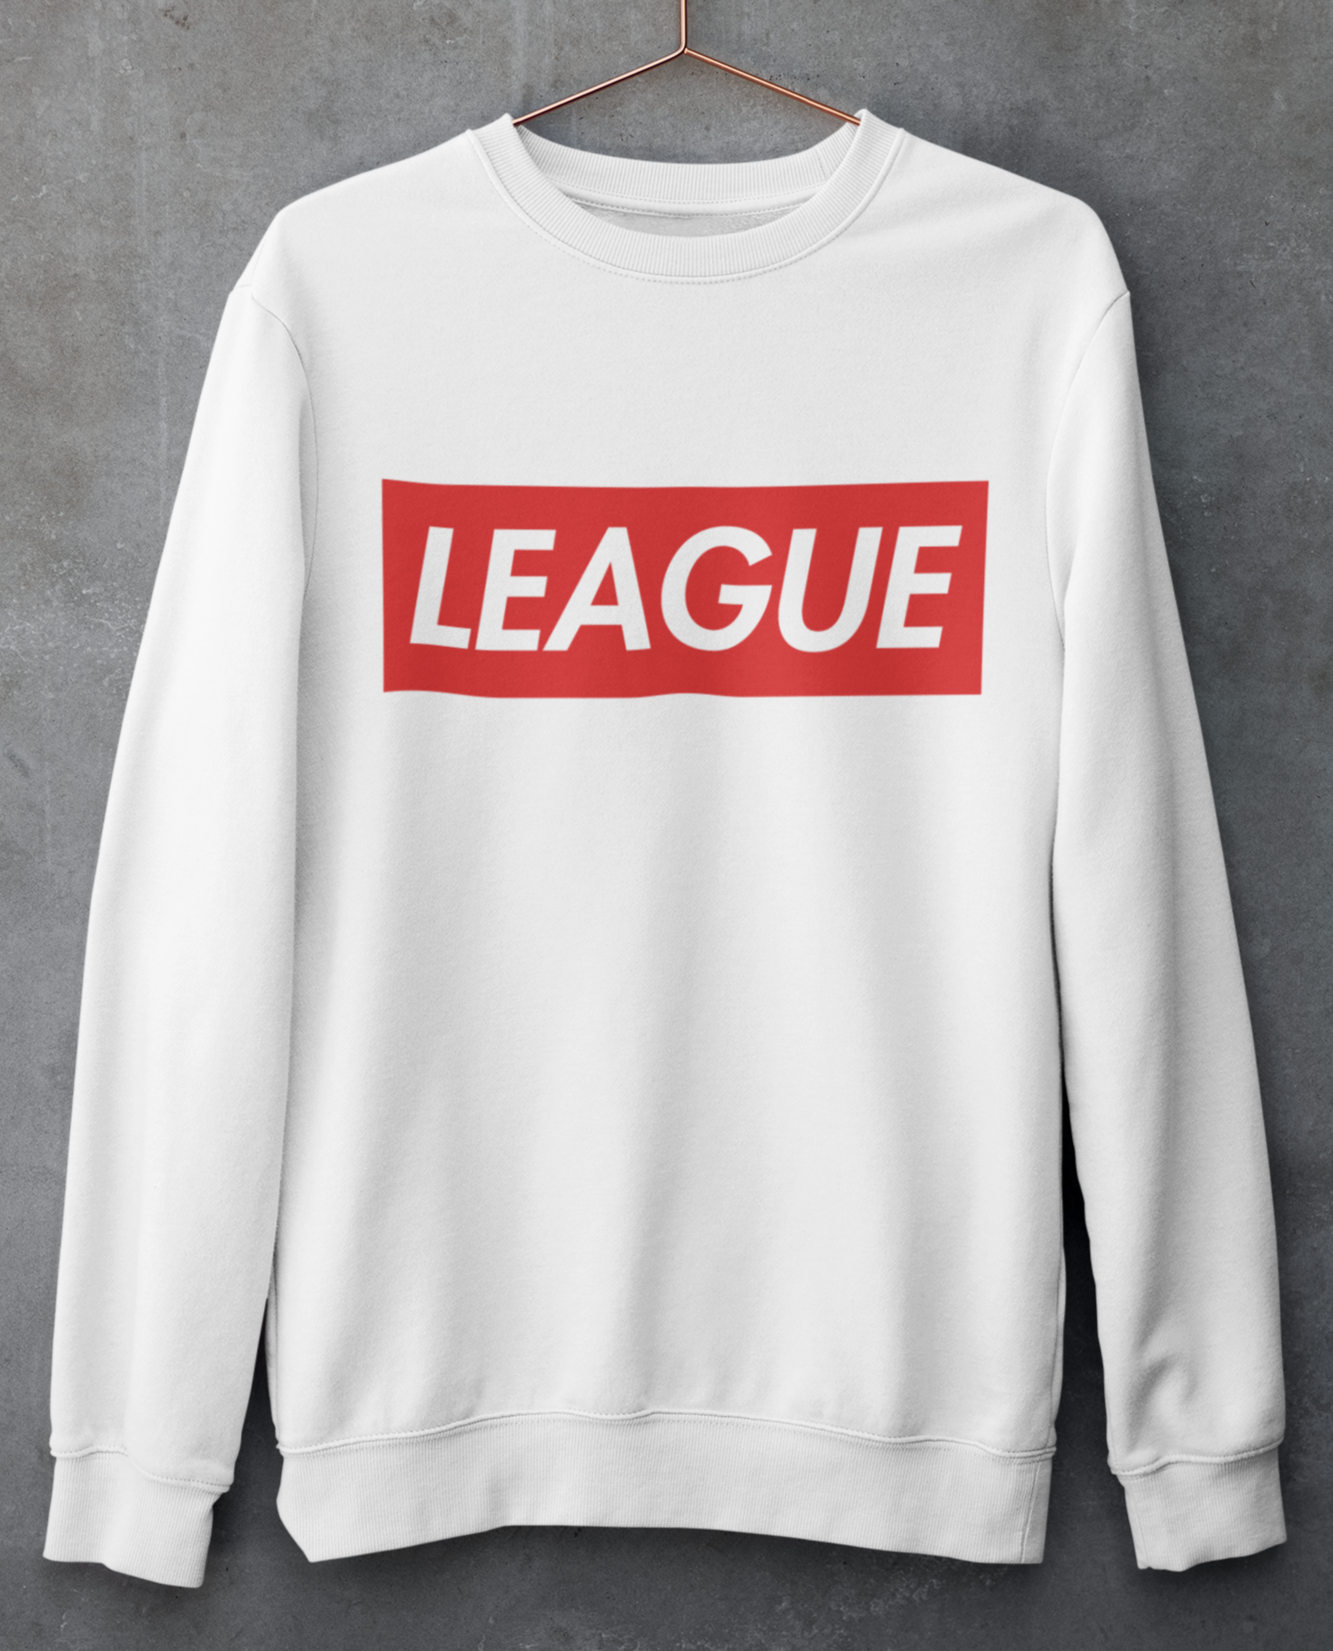 White sweatshirt saying league - HighCiti